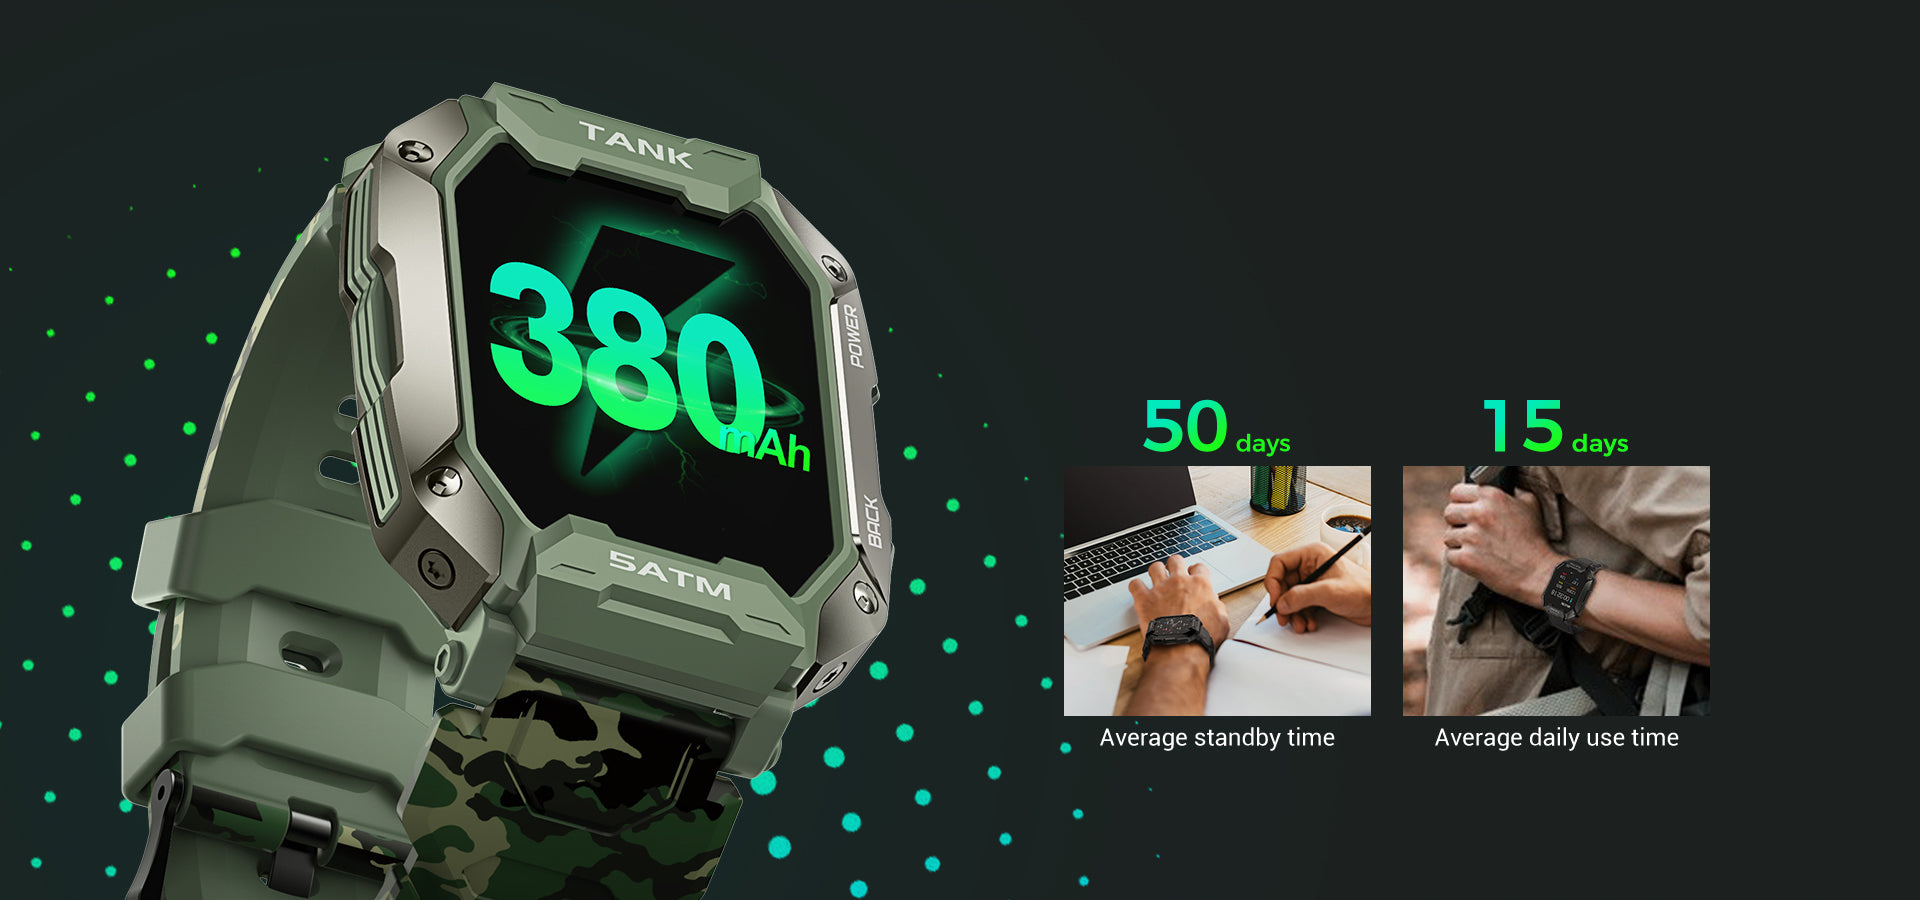 KOSPET TANK M1 Rugged Smartwatch, 380mAh Battery, 50days long standby